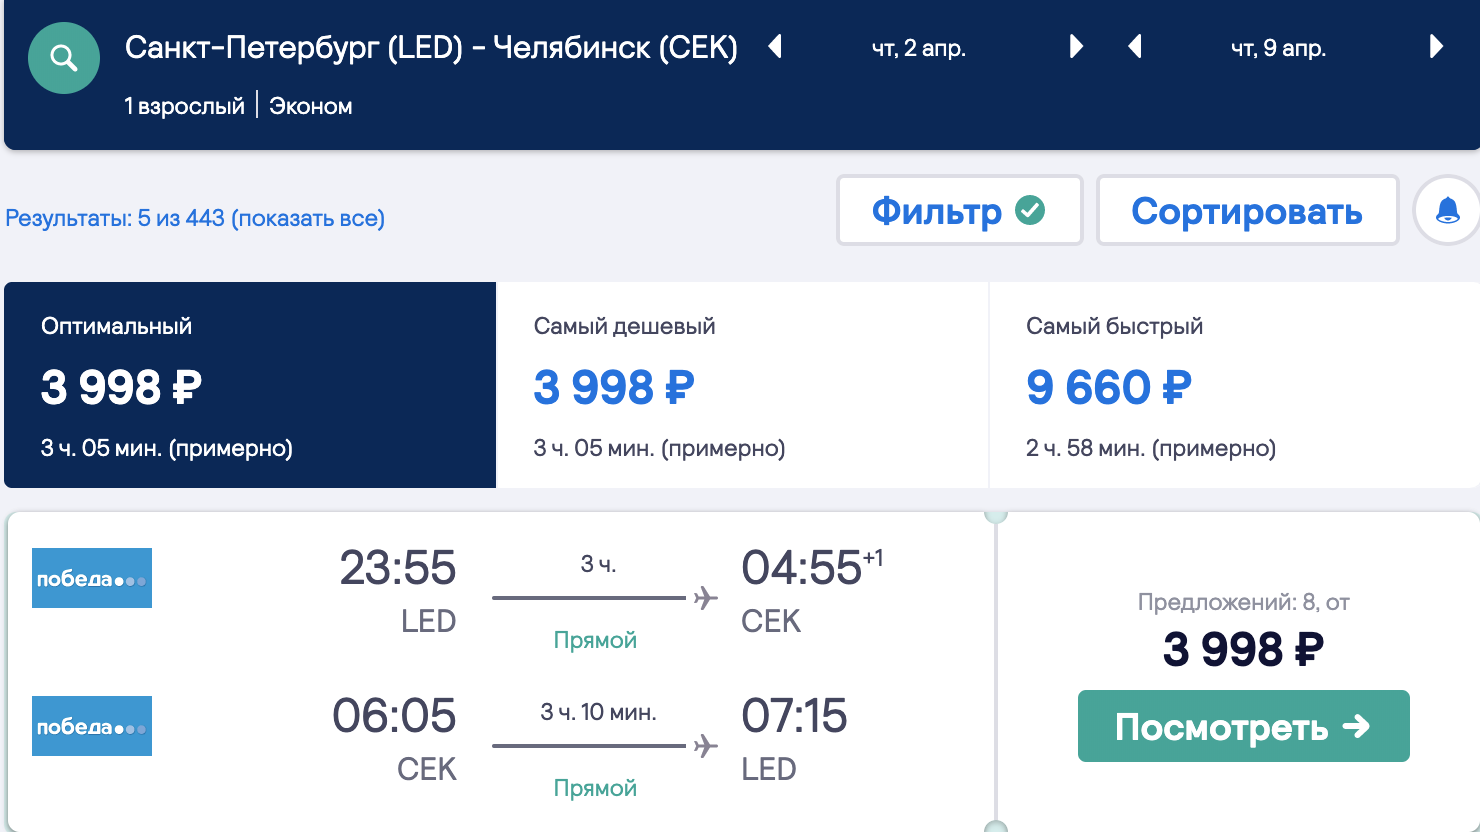 цена авиабилета из сочи до петербурга